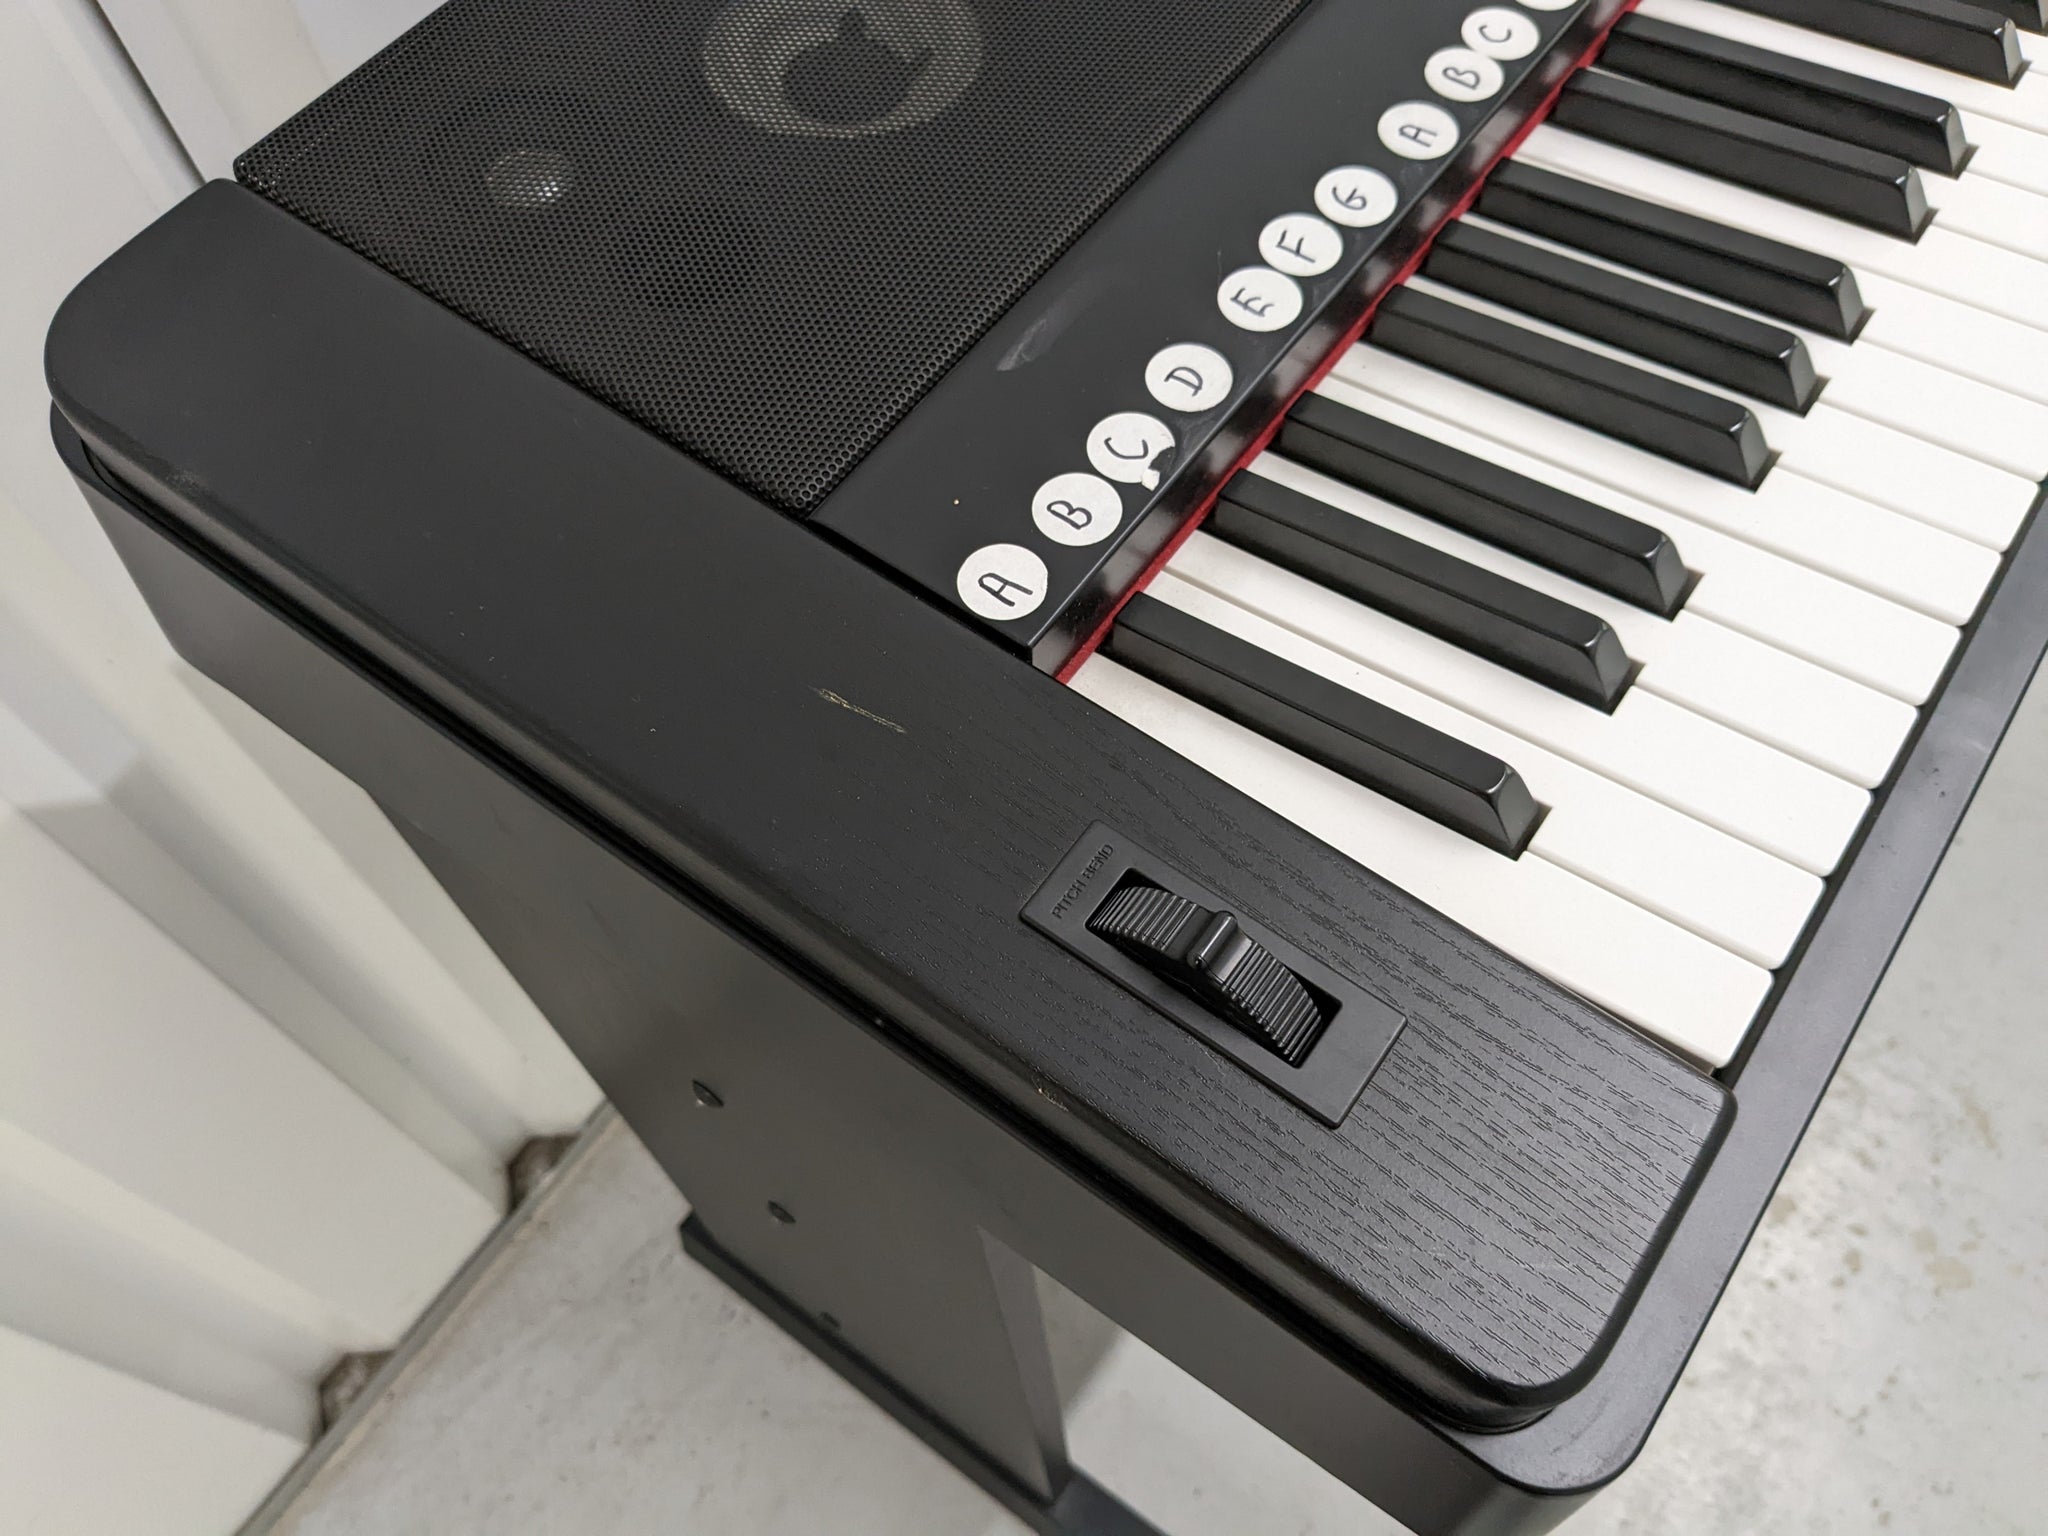 DISC Yamaha DGX 660 Digital Piano with Stand, Black